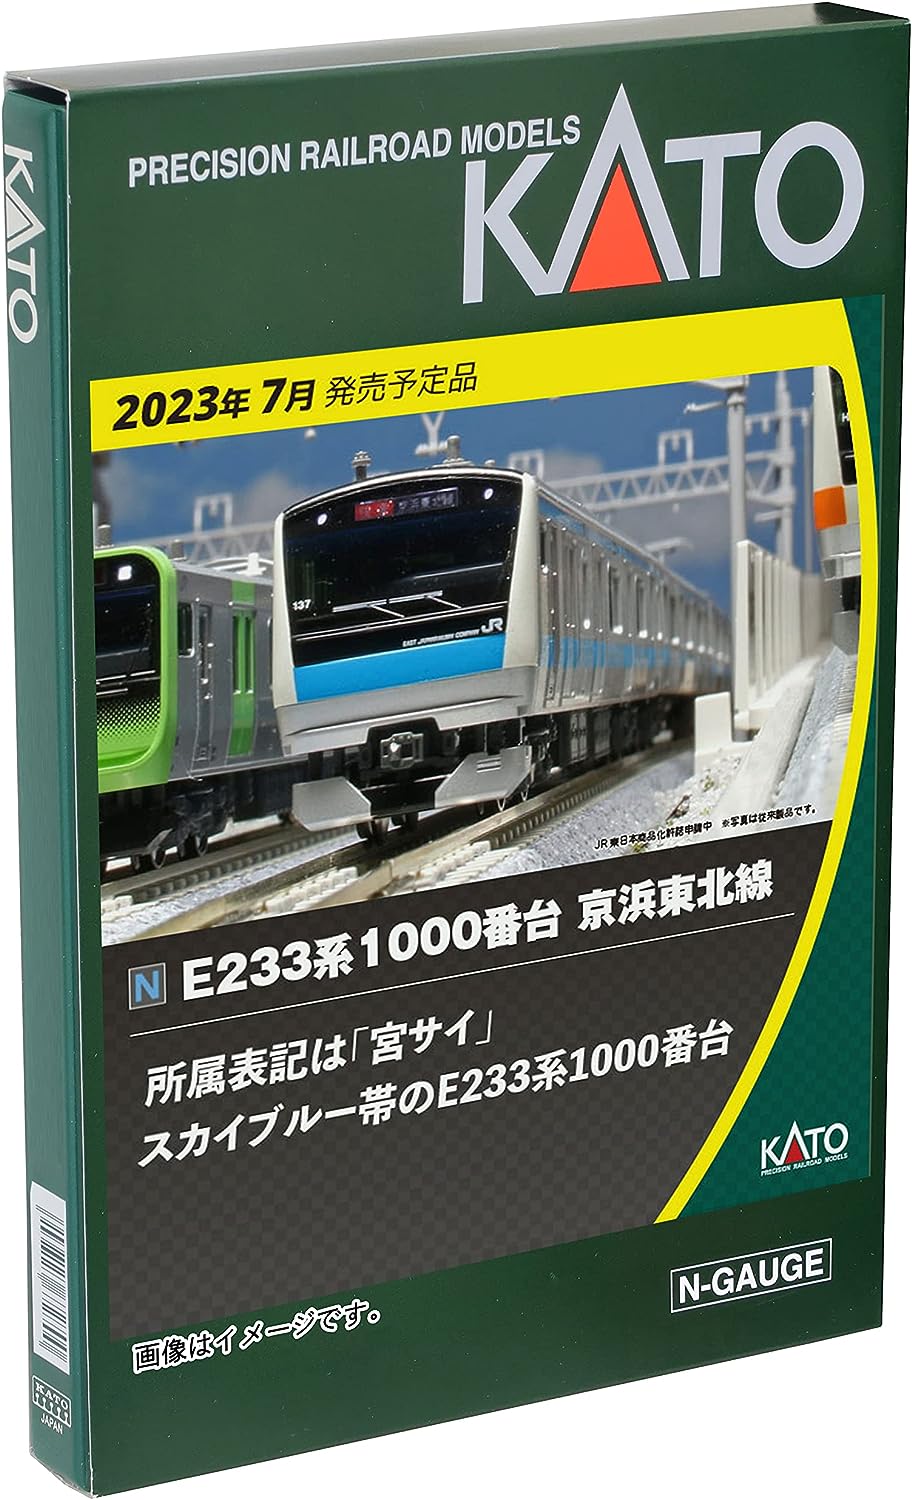 KATO 10-1827 Series E233-1000 Keihin Tohoku Line Additional Set A (Add-On 3-Car Set) - BanzaiHobby